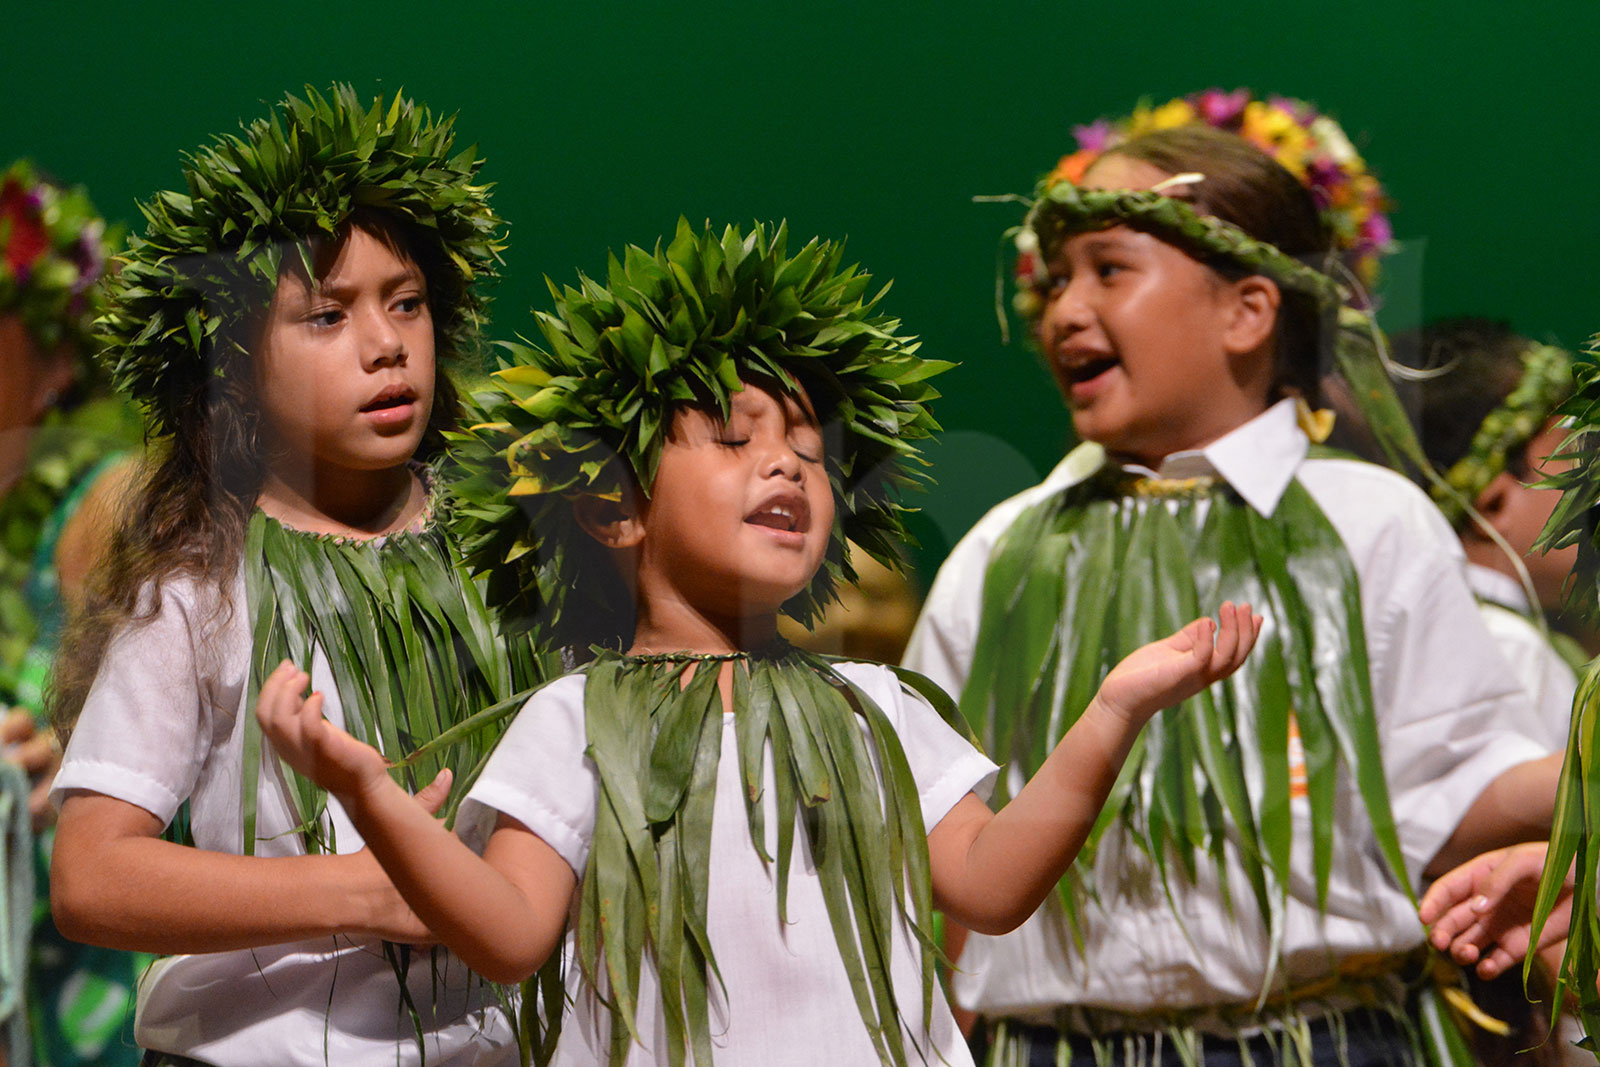 Pride and joy for Cook Islands Māori culture